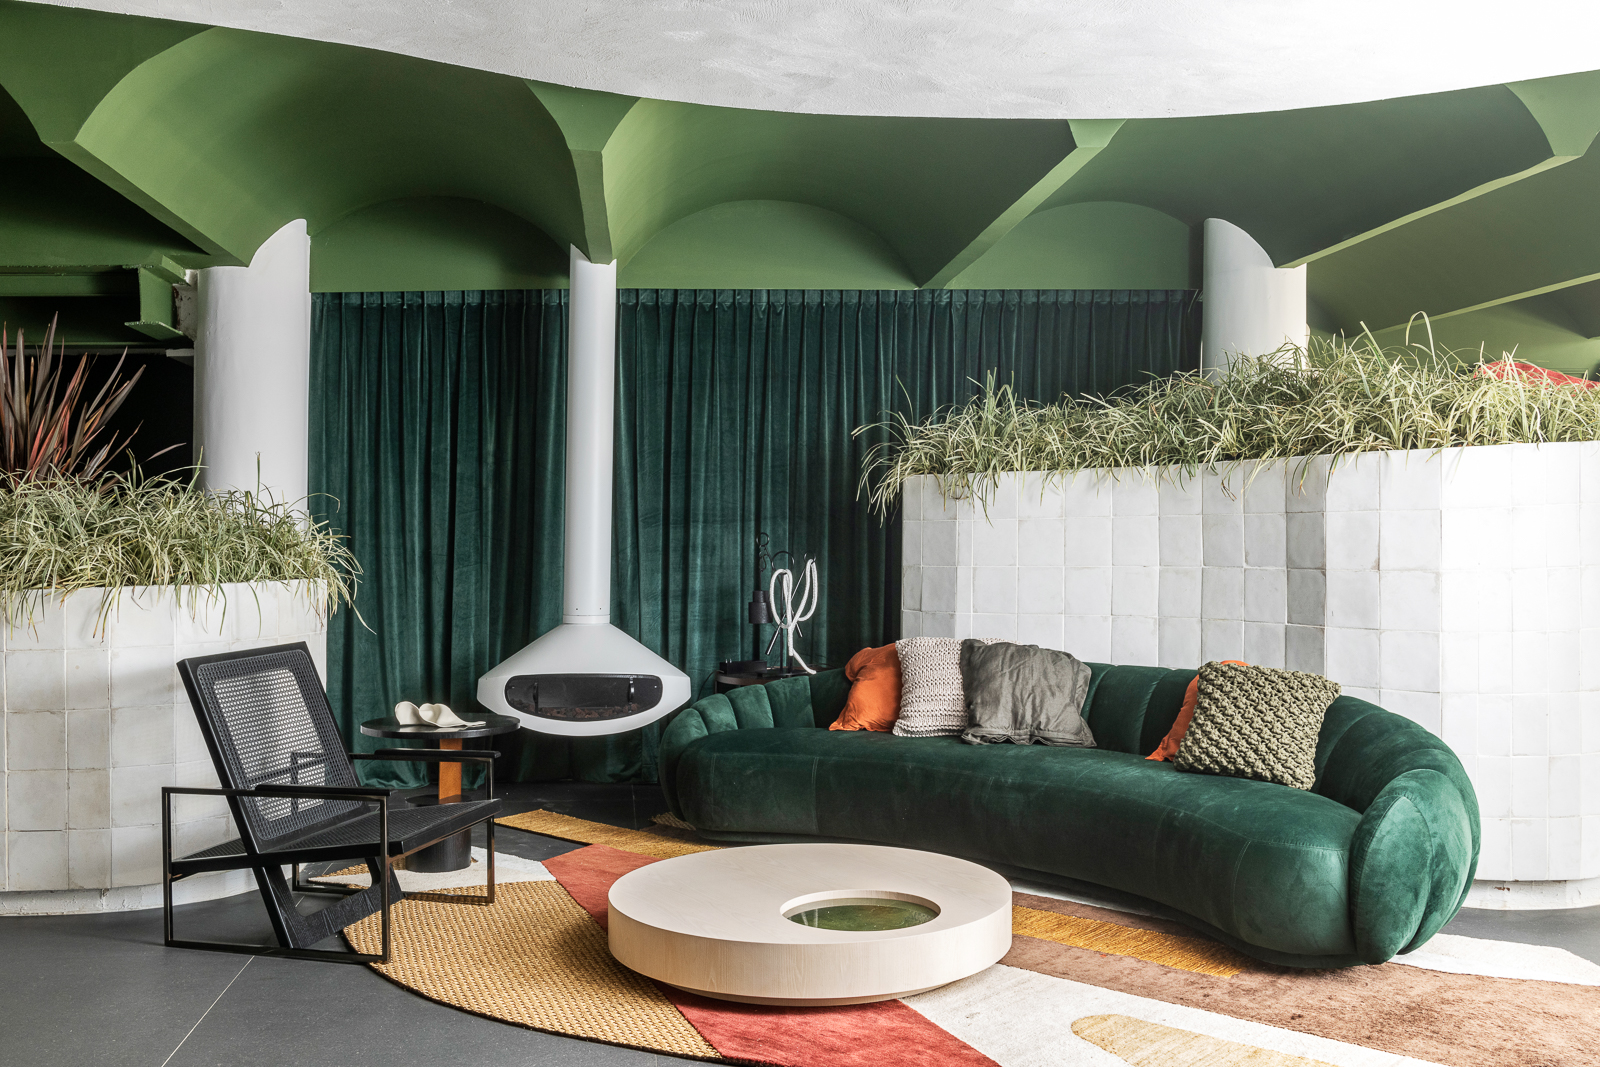 ricardo abreu restaurante casacor sao paulo 2022 mostra decoracao design sofa tapete lareira poltrona